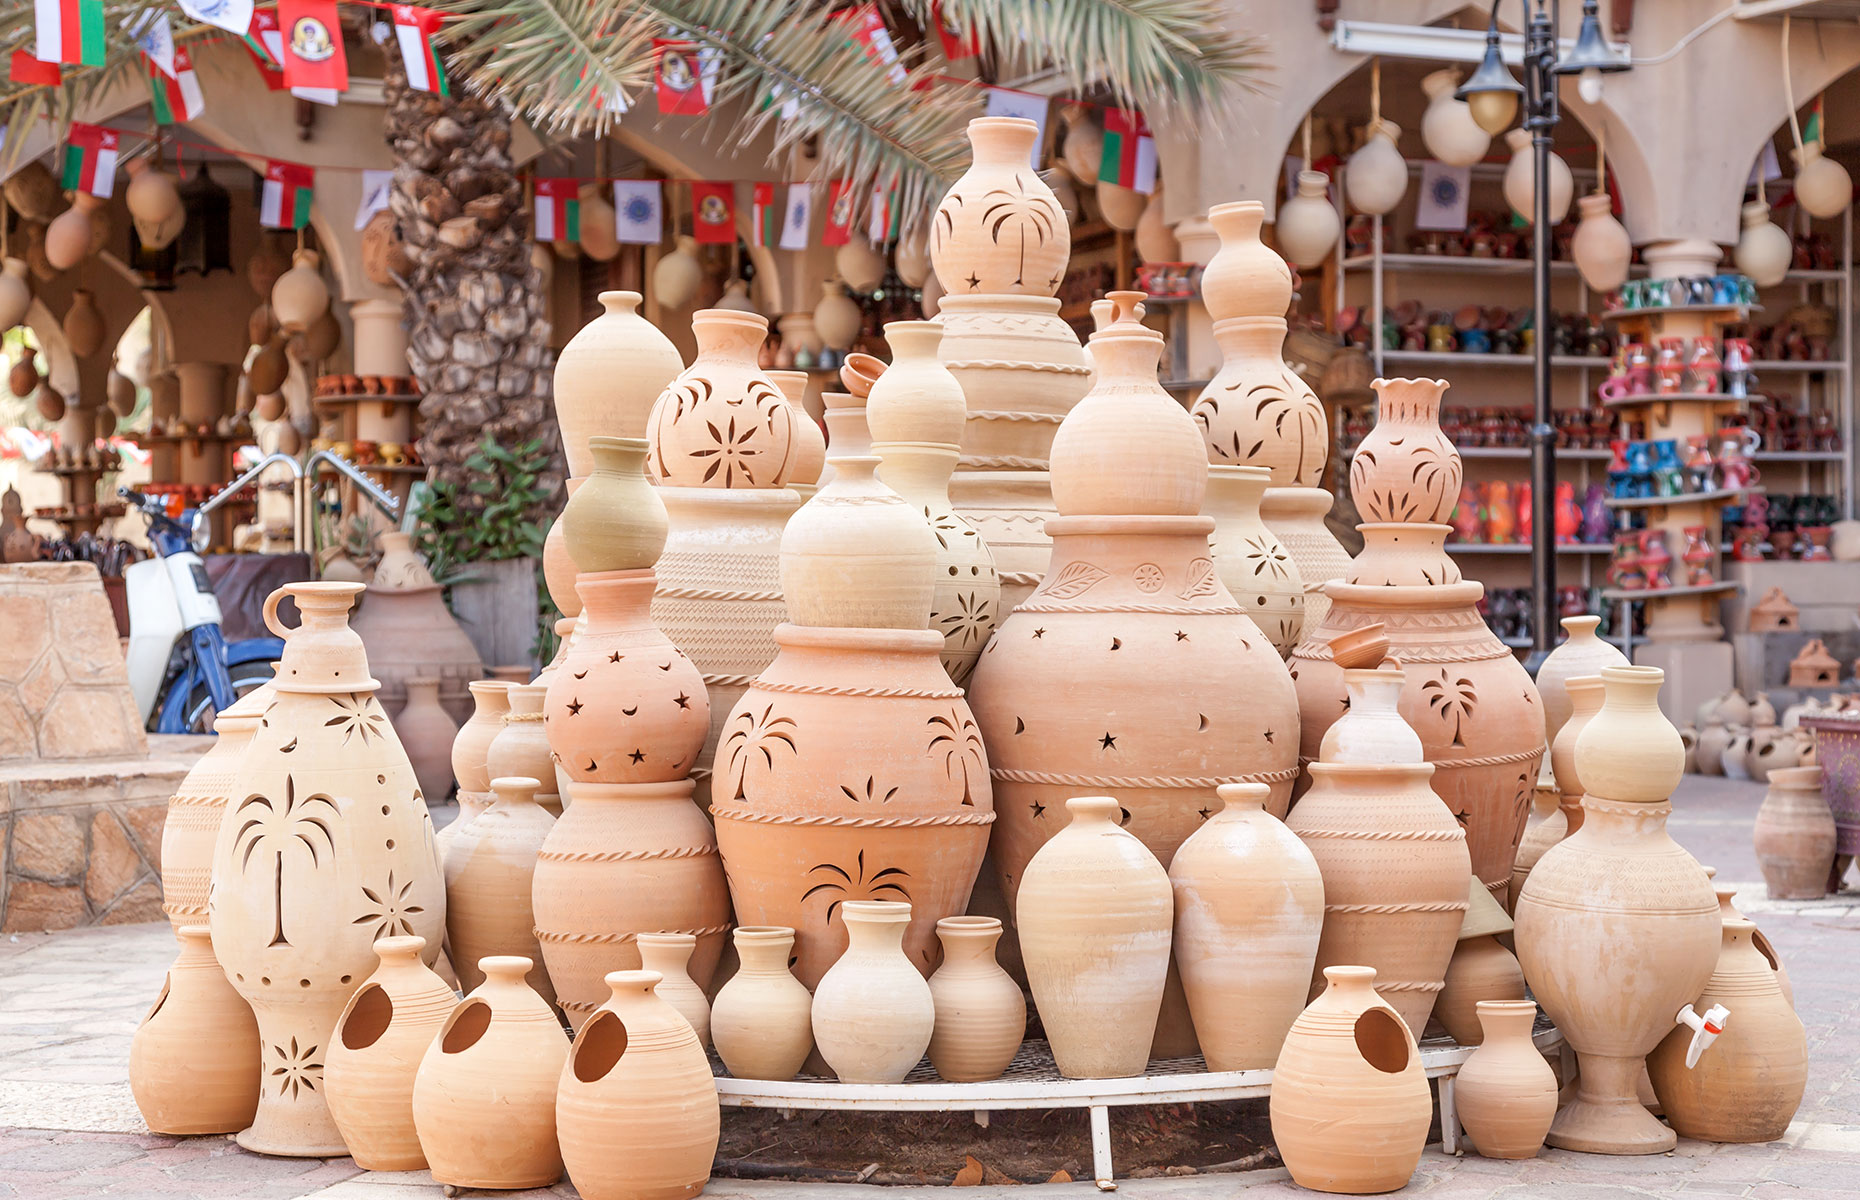 Terracota pots at Nizwa souq (Image: Shutterstock/Philip Lange)